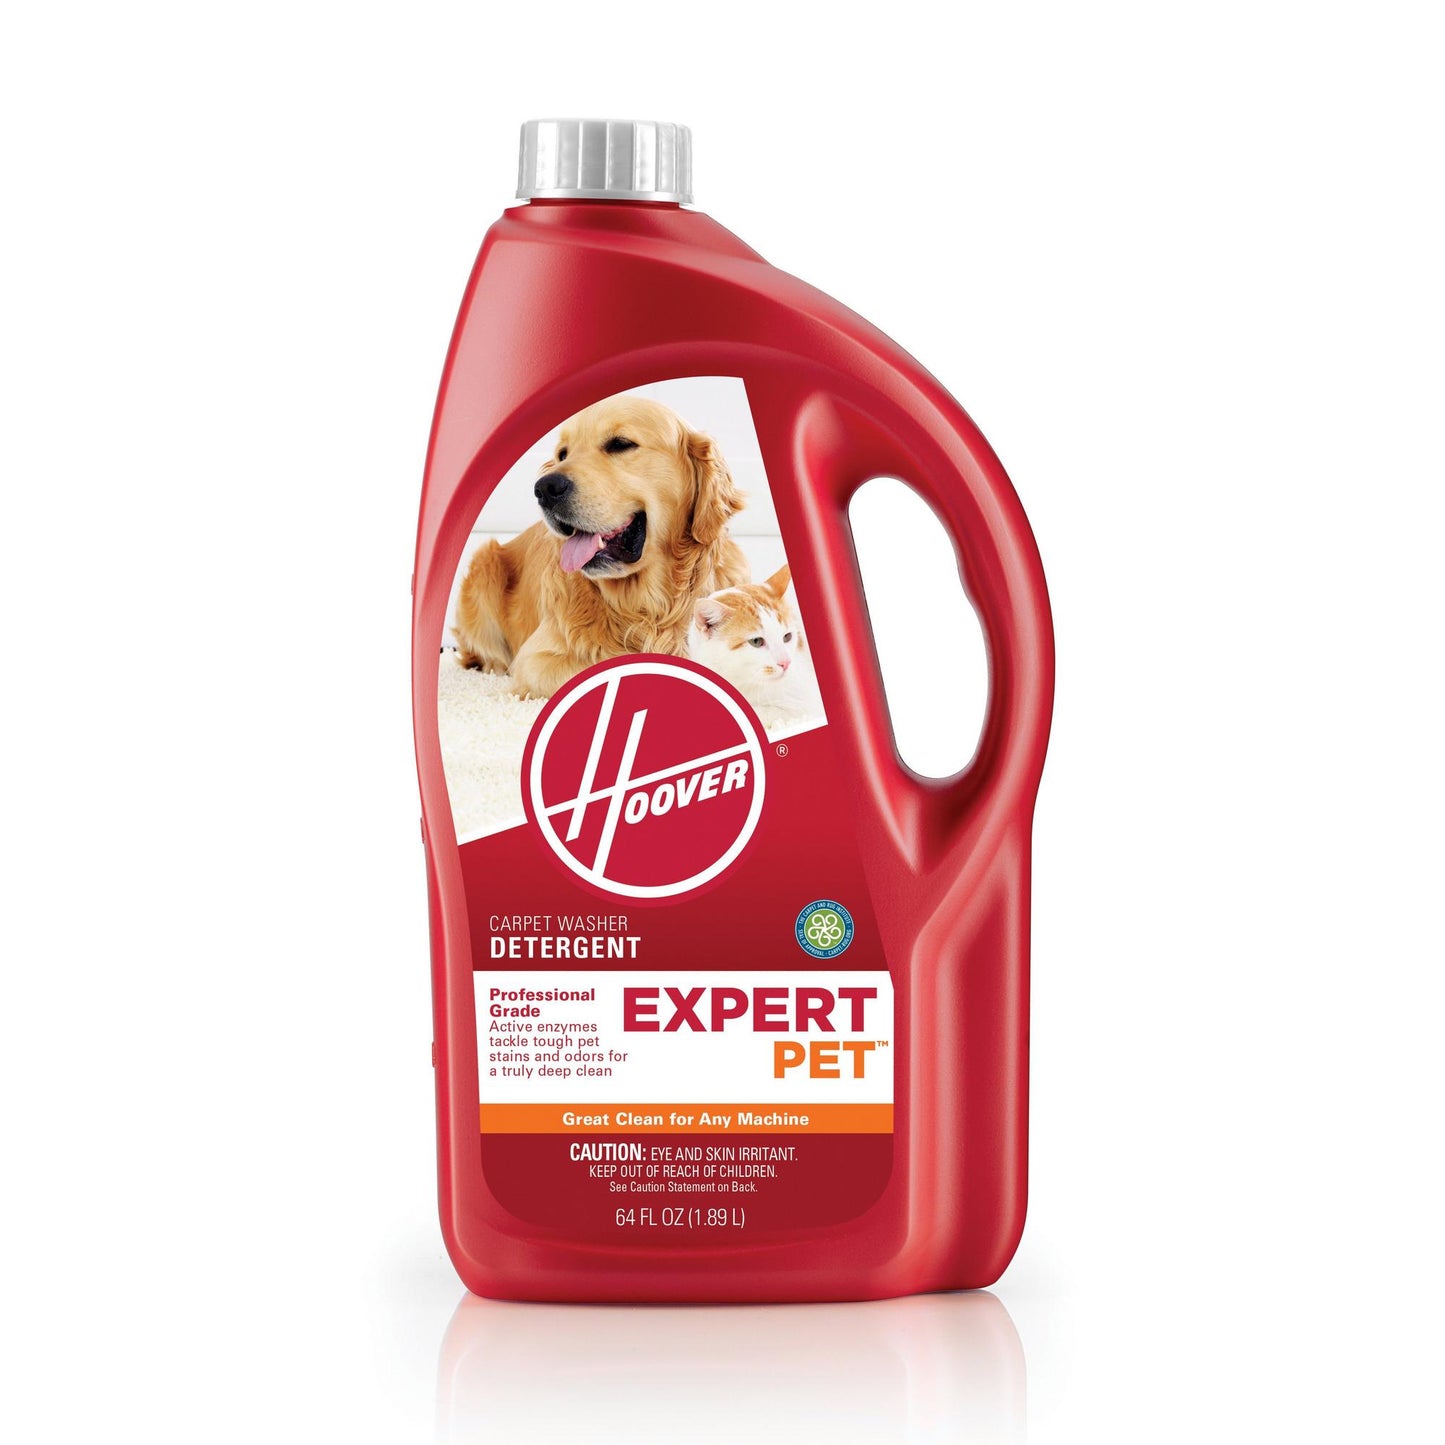 64 oz. Expert Pet Carpet Washer Detergent